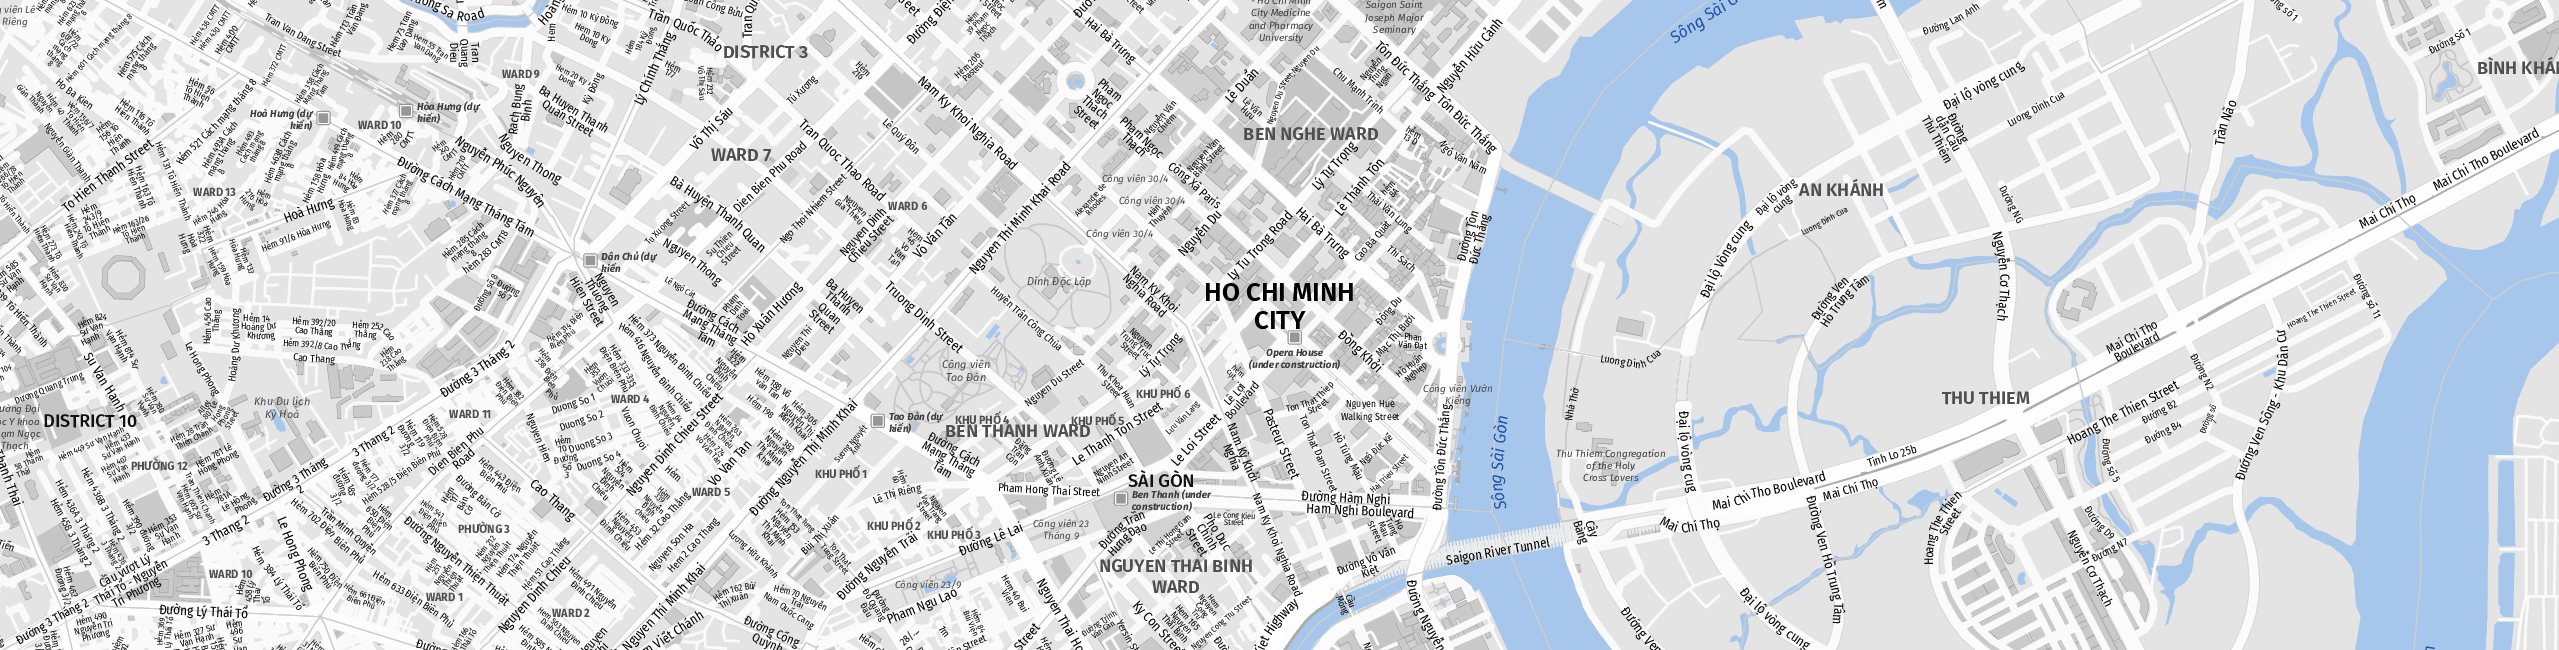 Stadtplan Hô-Chi-Minh-Ville zum Downloaden.